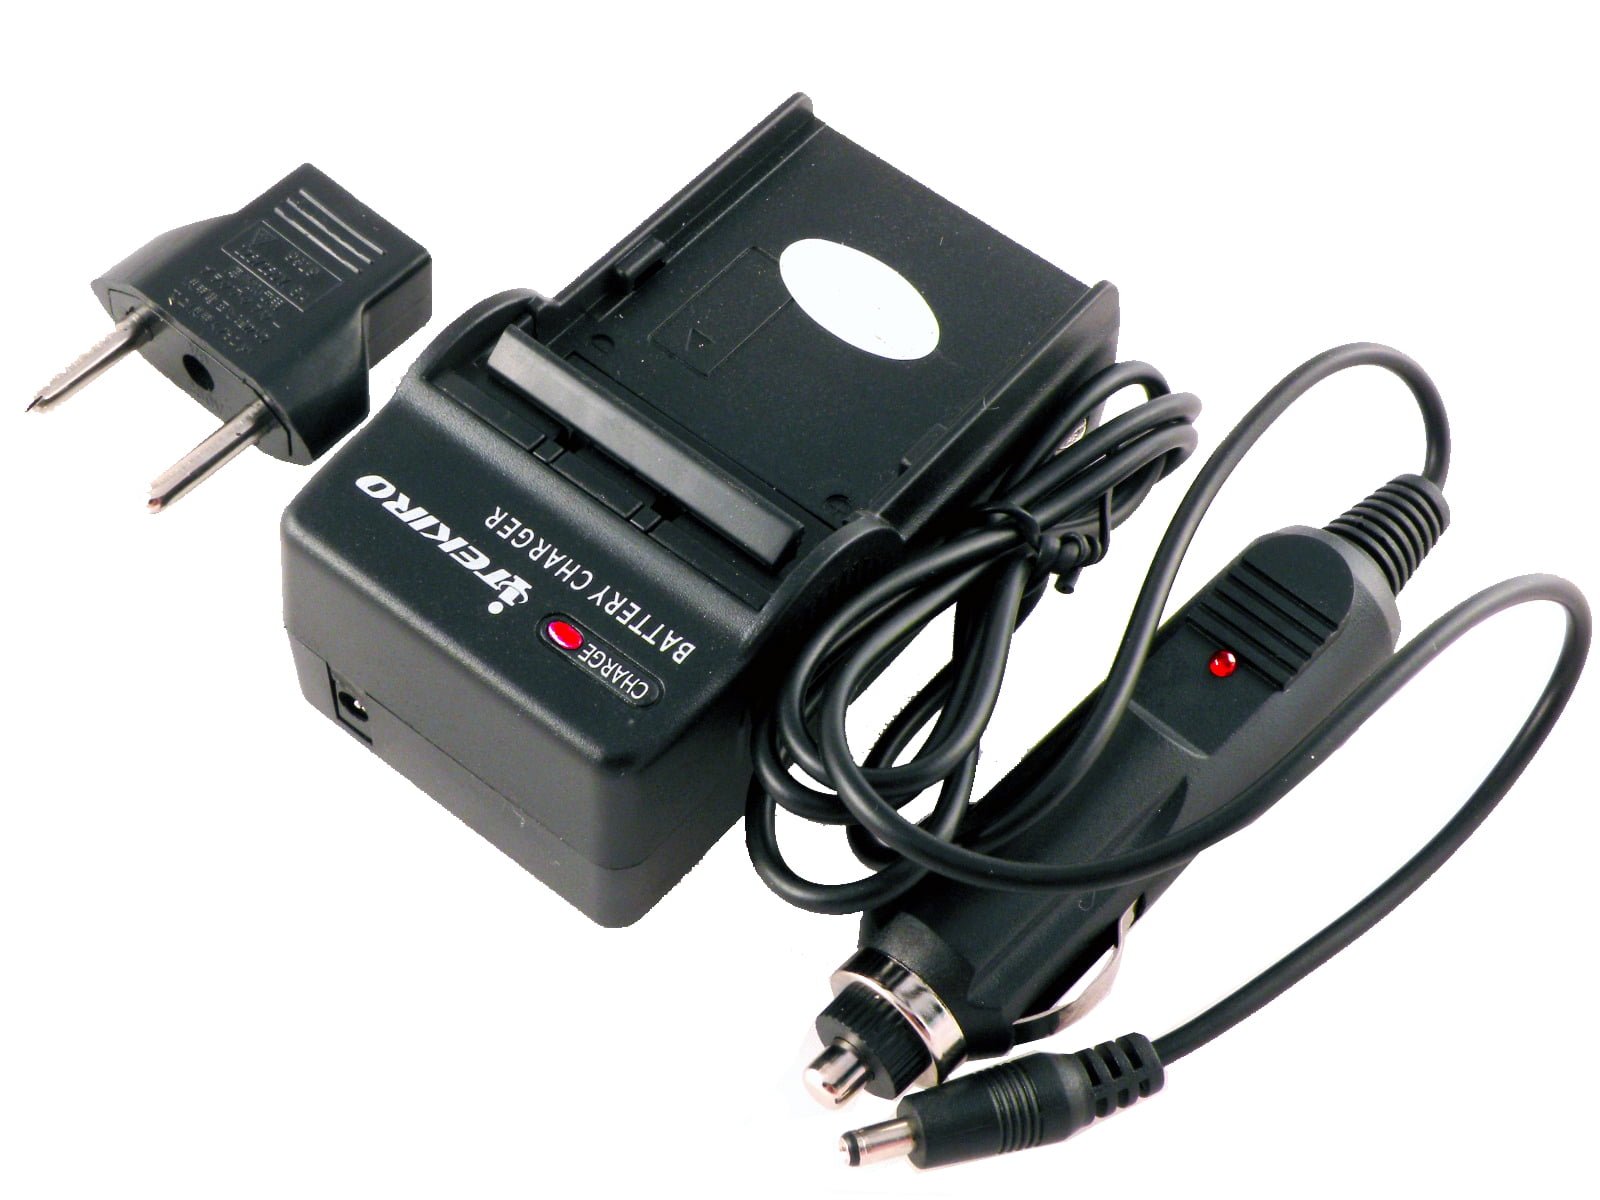 X-930 X-935 DIGITAL CAMERA USB CABLE CORD LEAD X-925 X-920 OLYMPUS X-915 